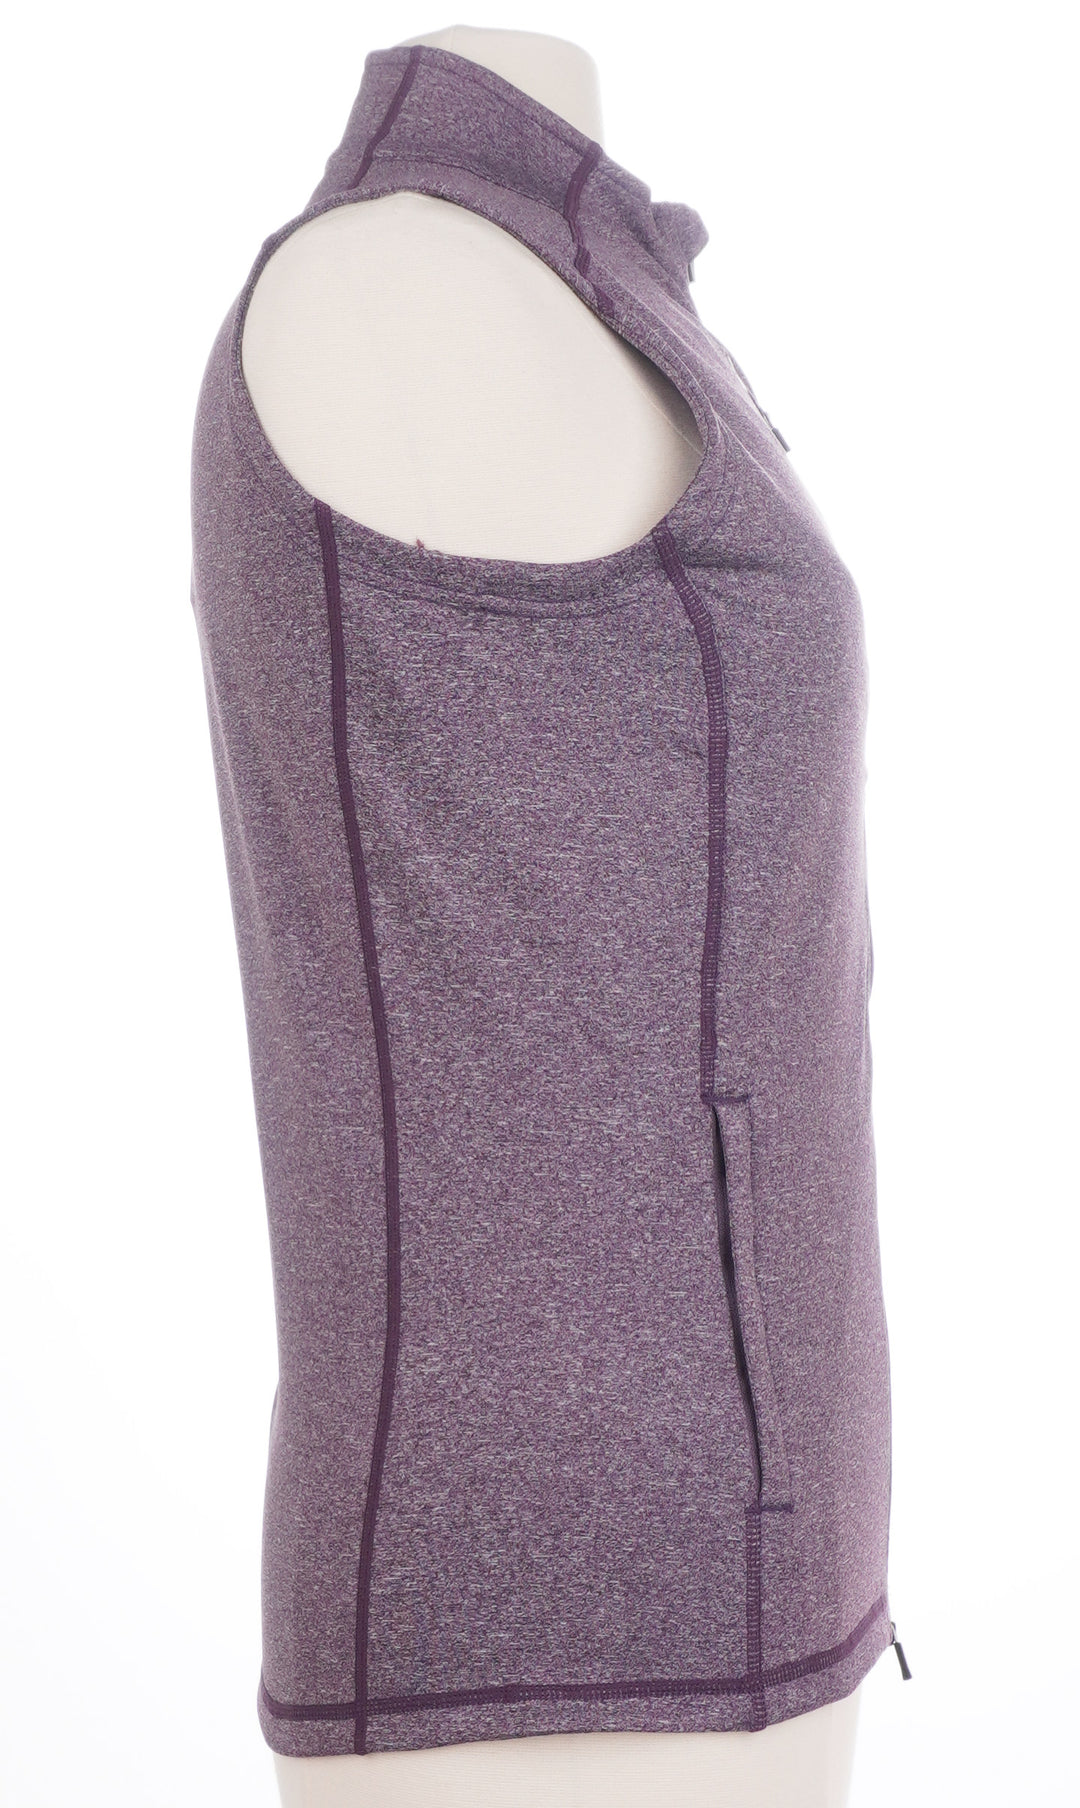 Levelwear Boost June Vest - Heather Shiraz - Size Small - Skorzie